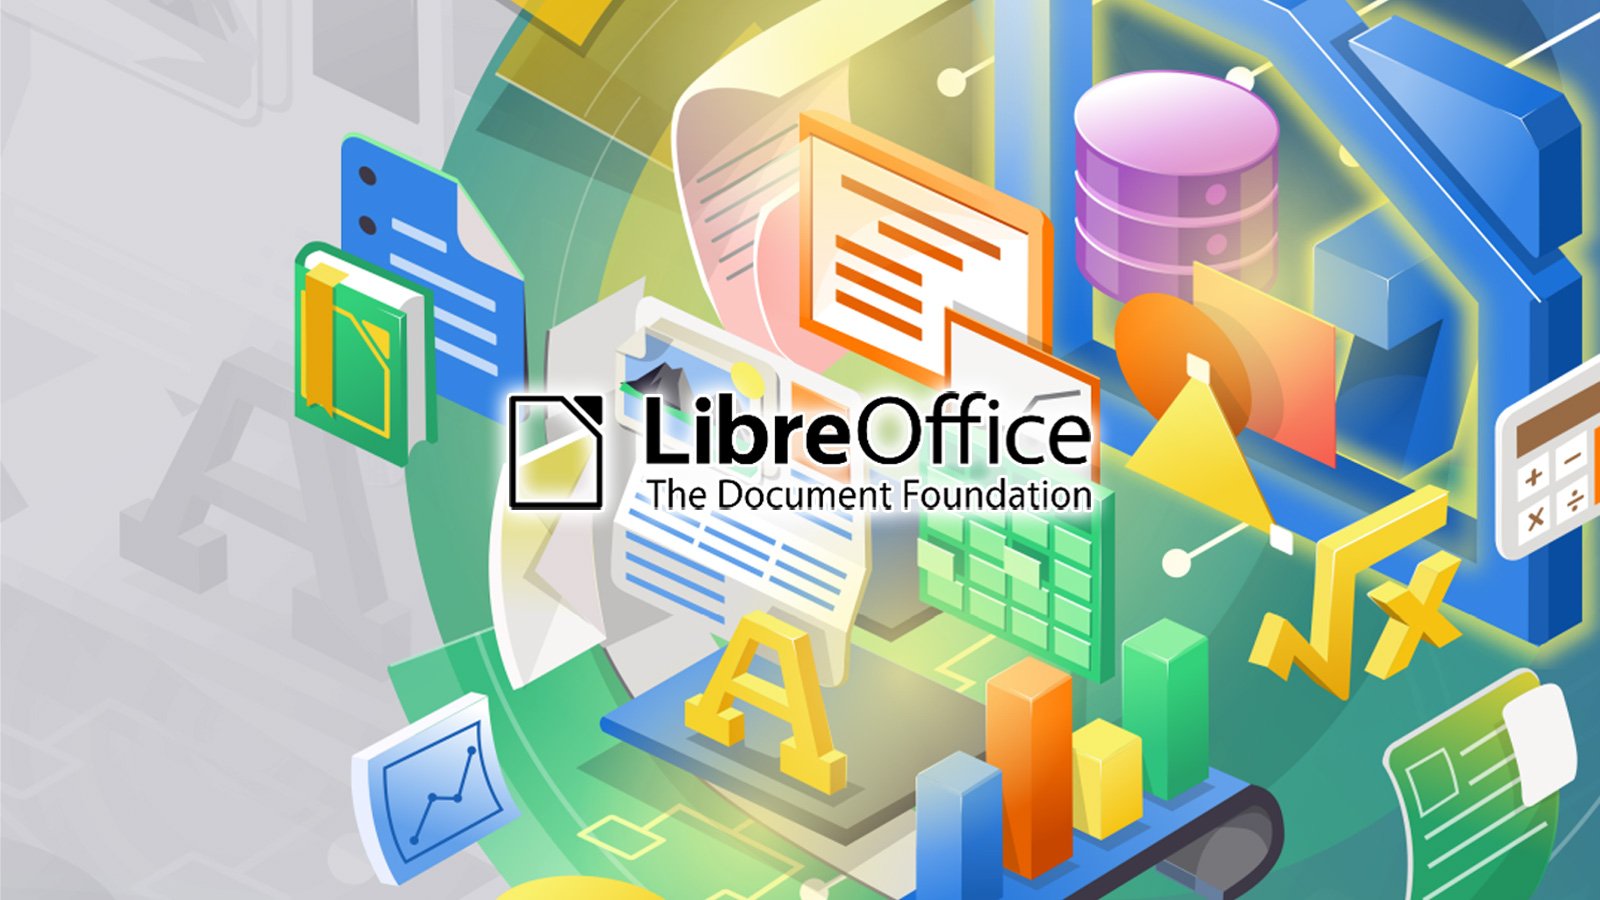 Renkli bir arka planda LibreOffice logosu